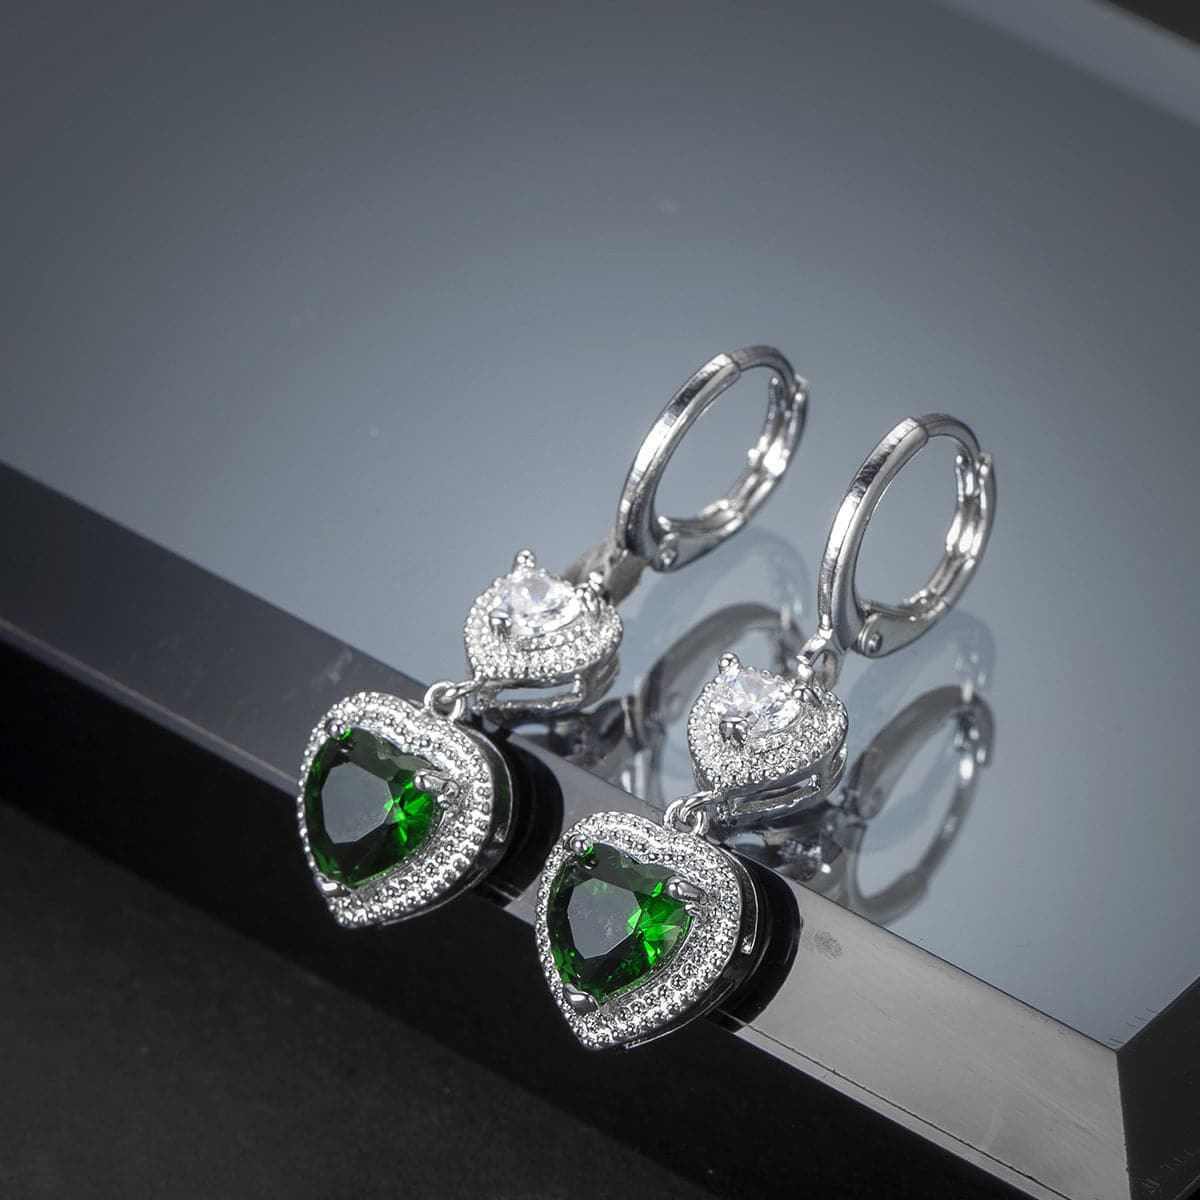 Green Crystal & Silver-Plated Heart Drop Earrings